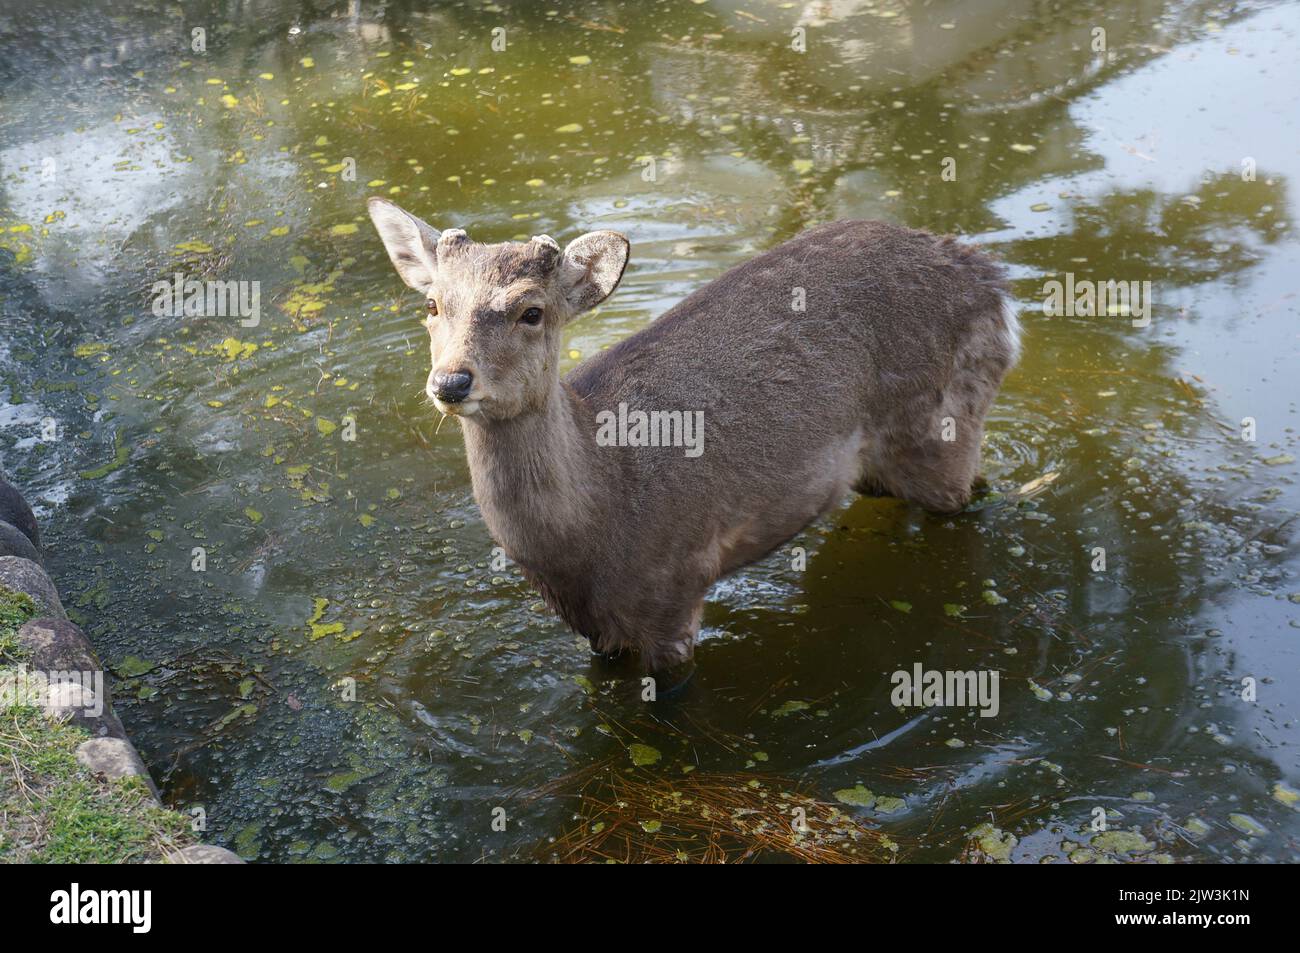 Deer in the water, in Nara Stock Photo